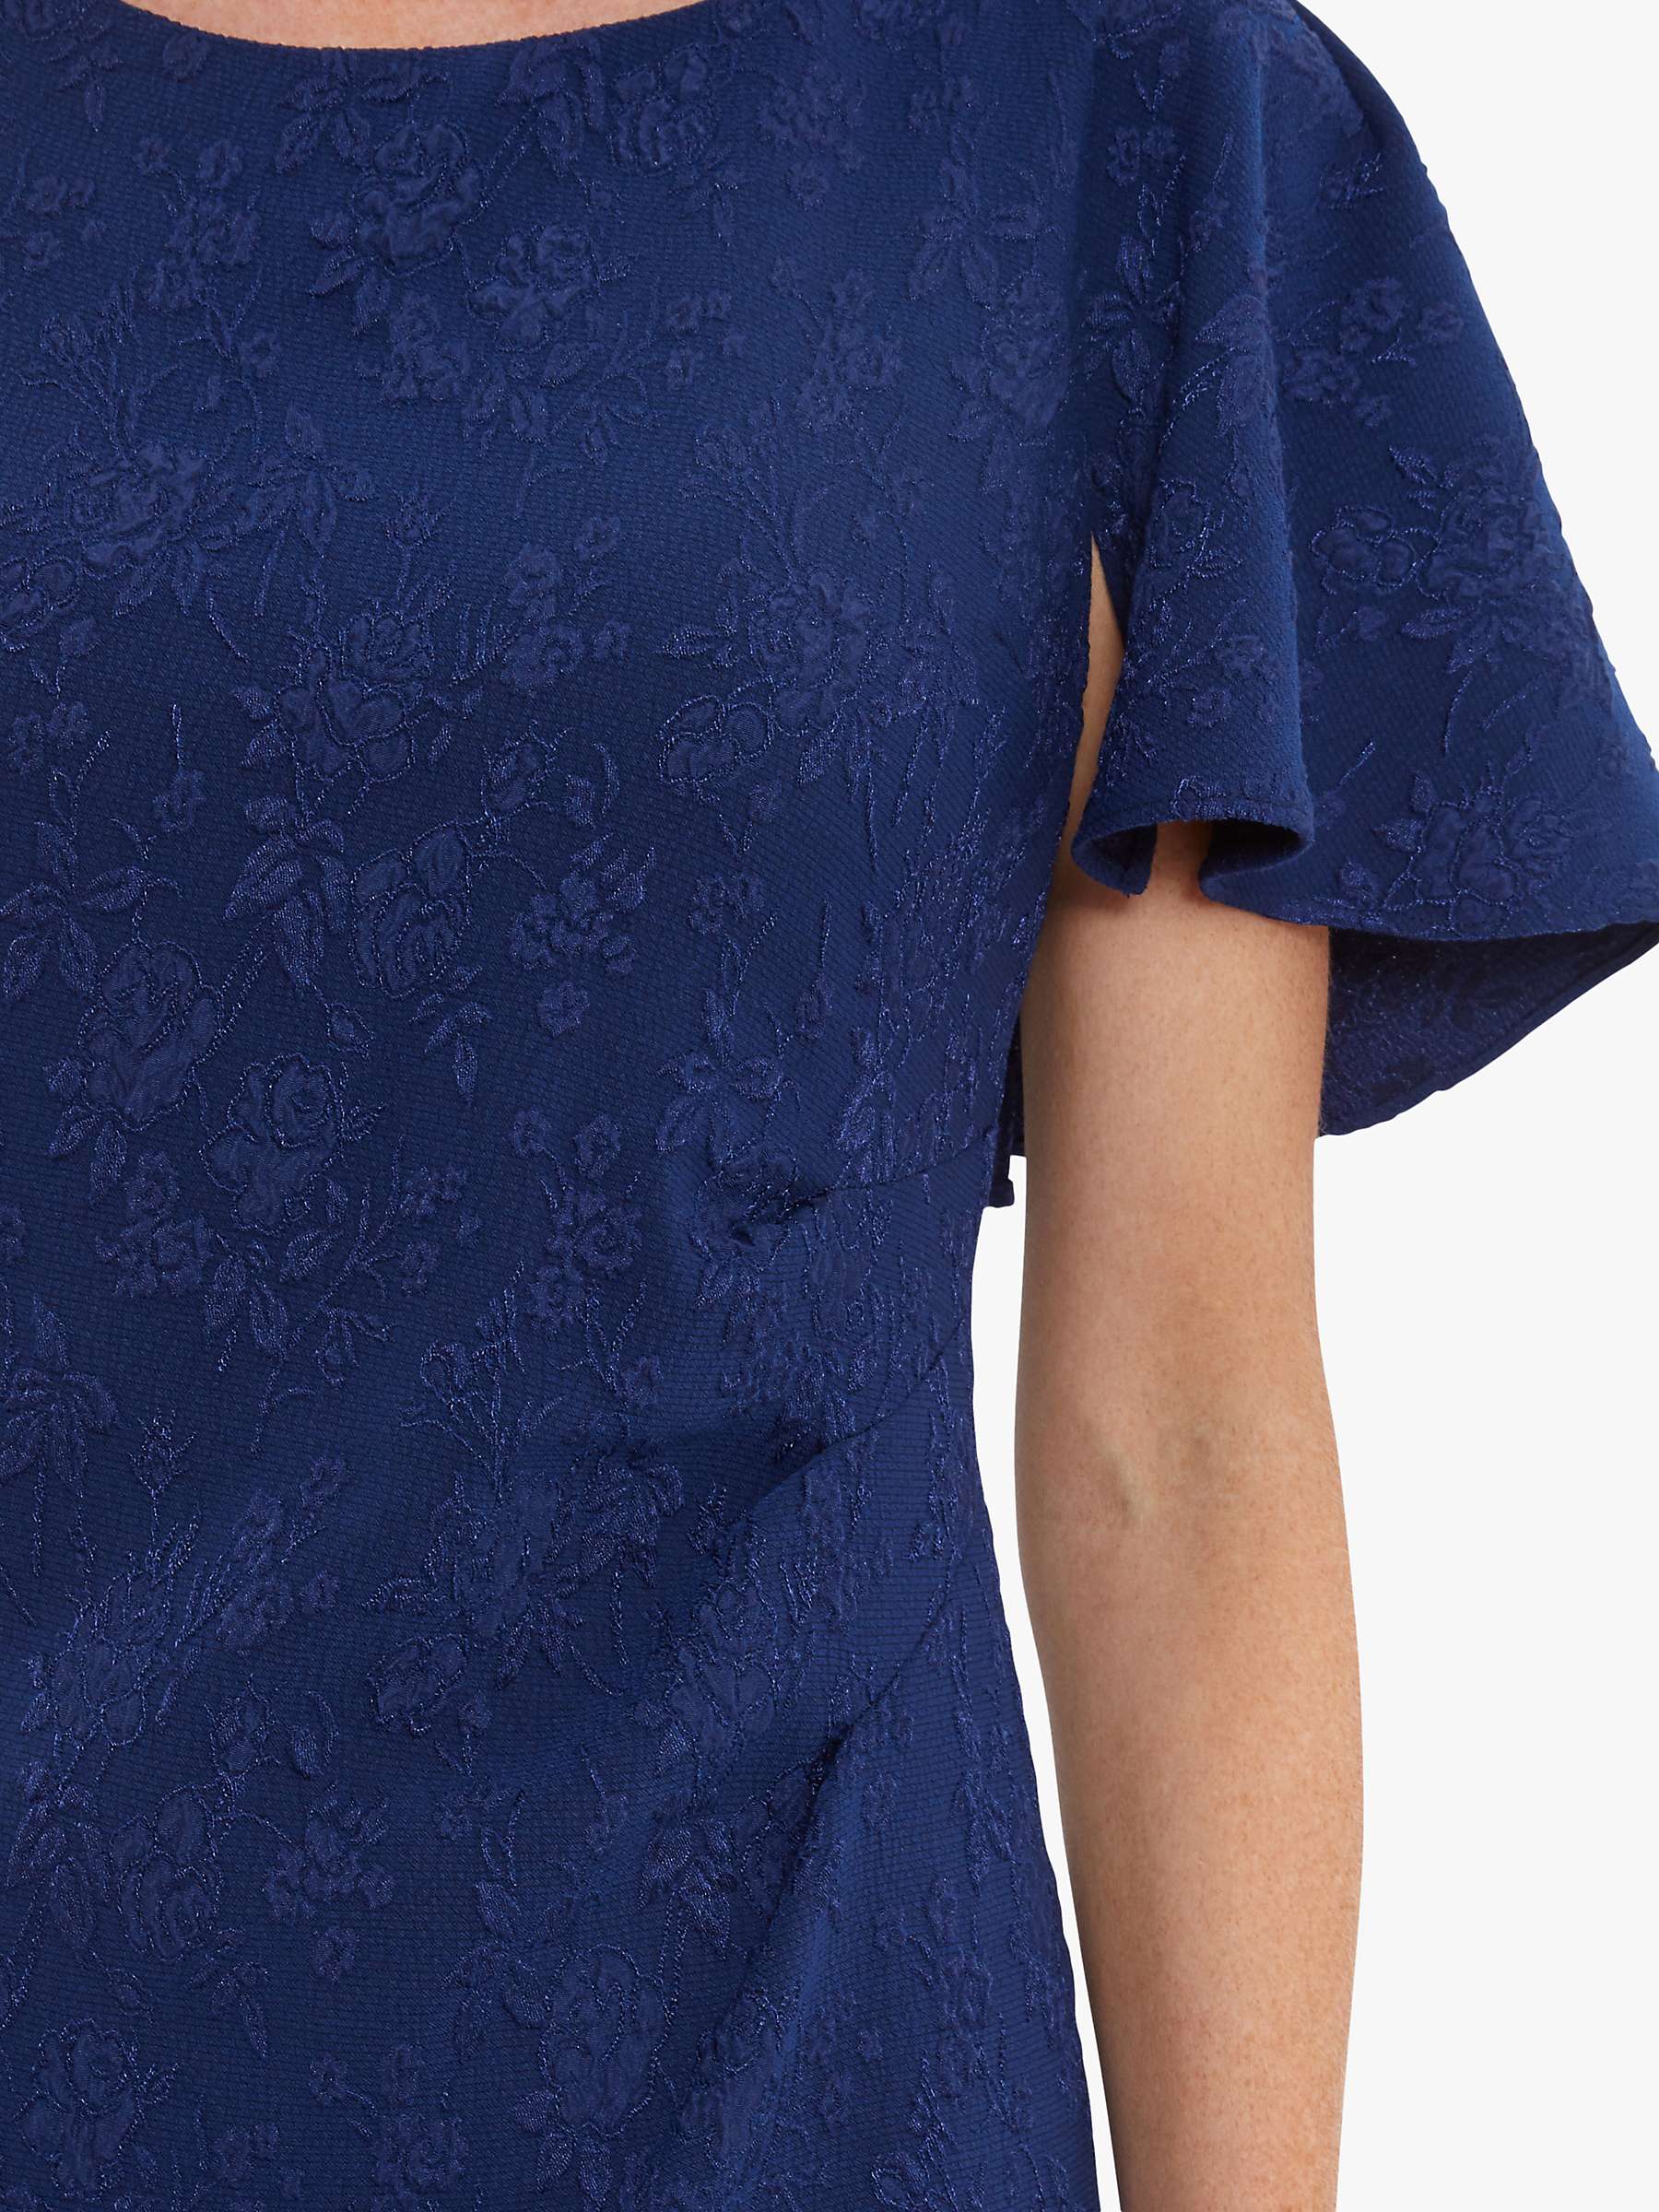 Buy Gina Bacconi Sahar Floral Embroidered Mini Dress Online at johnlewis.com